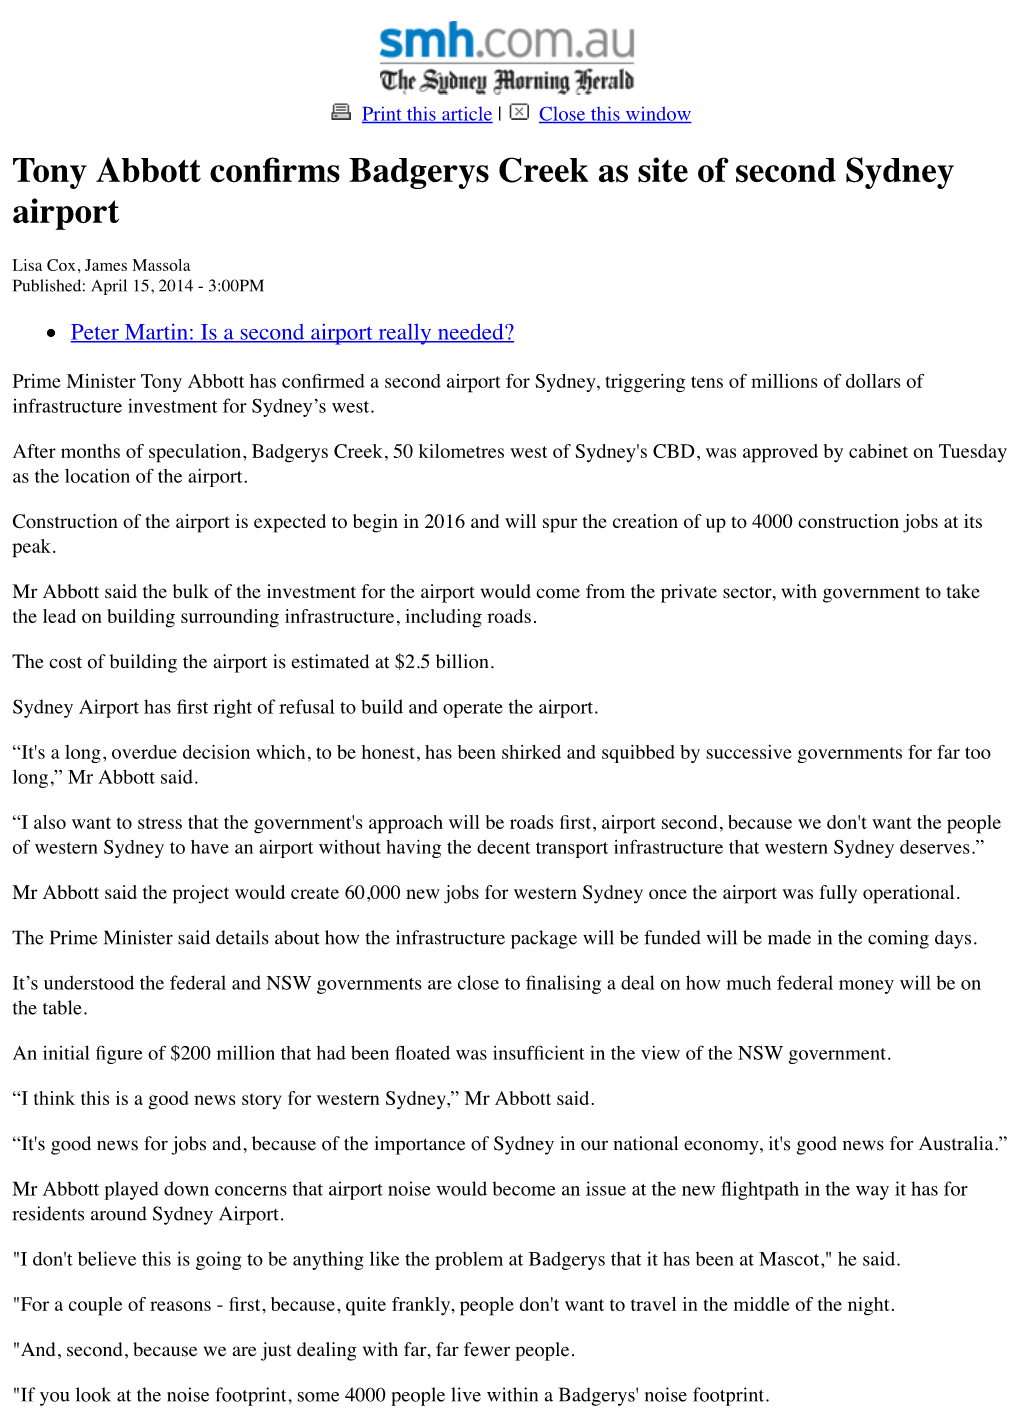 Tony Abbott Confirms Badgerys Creek As Site of Second Sydney Airport